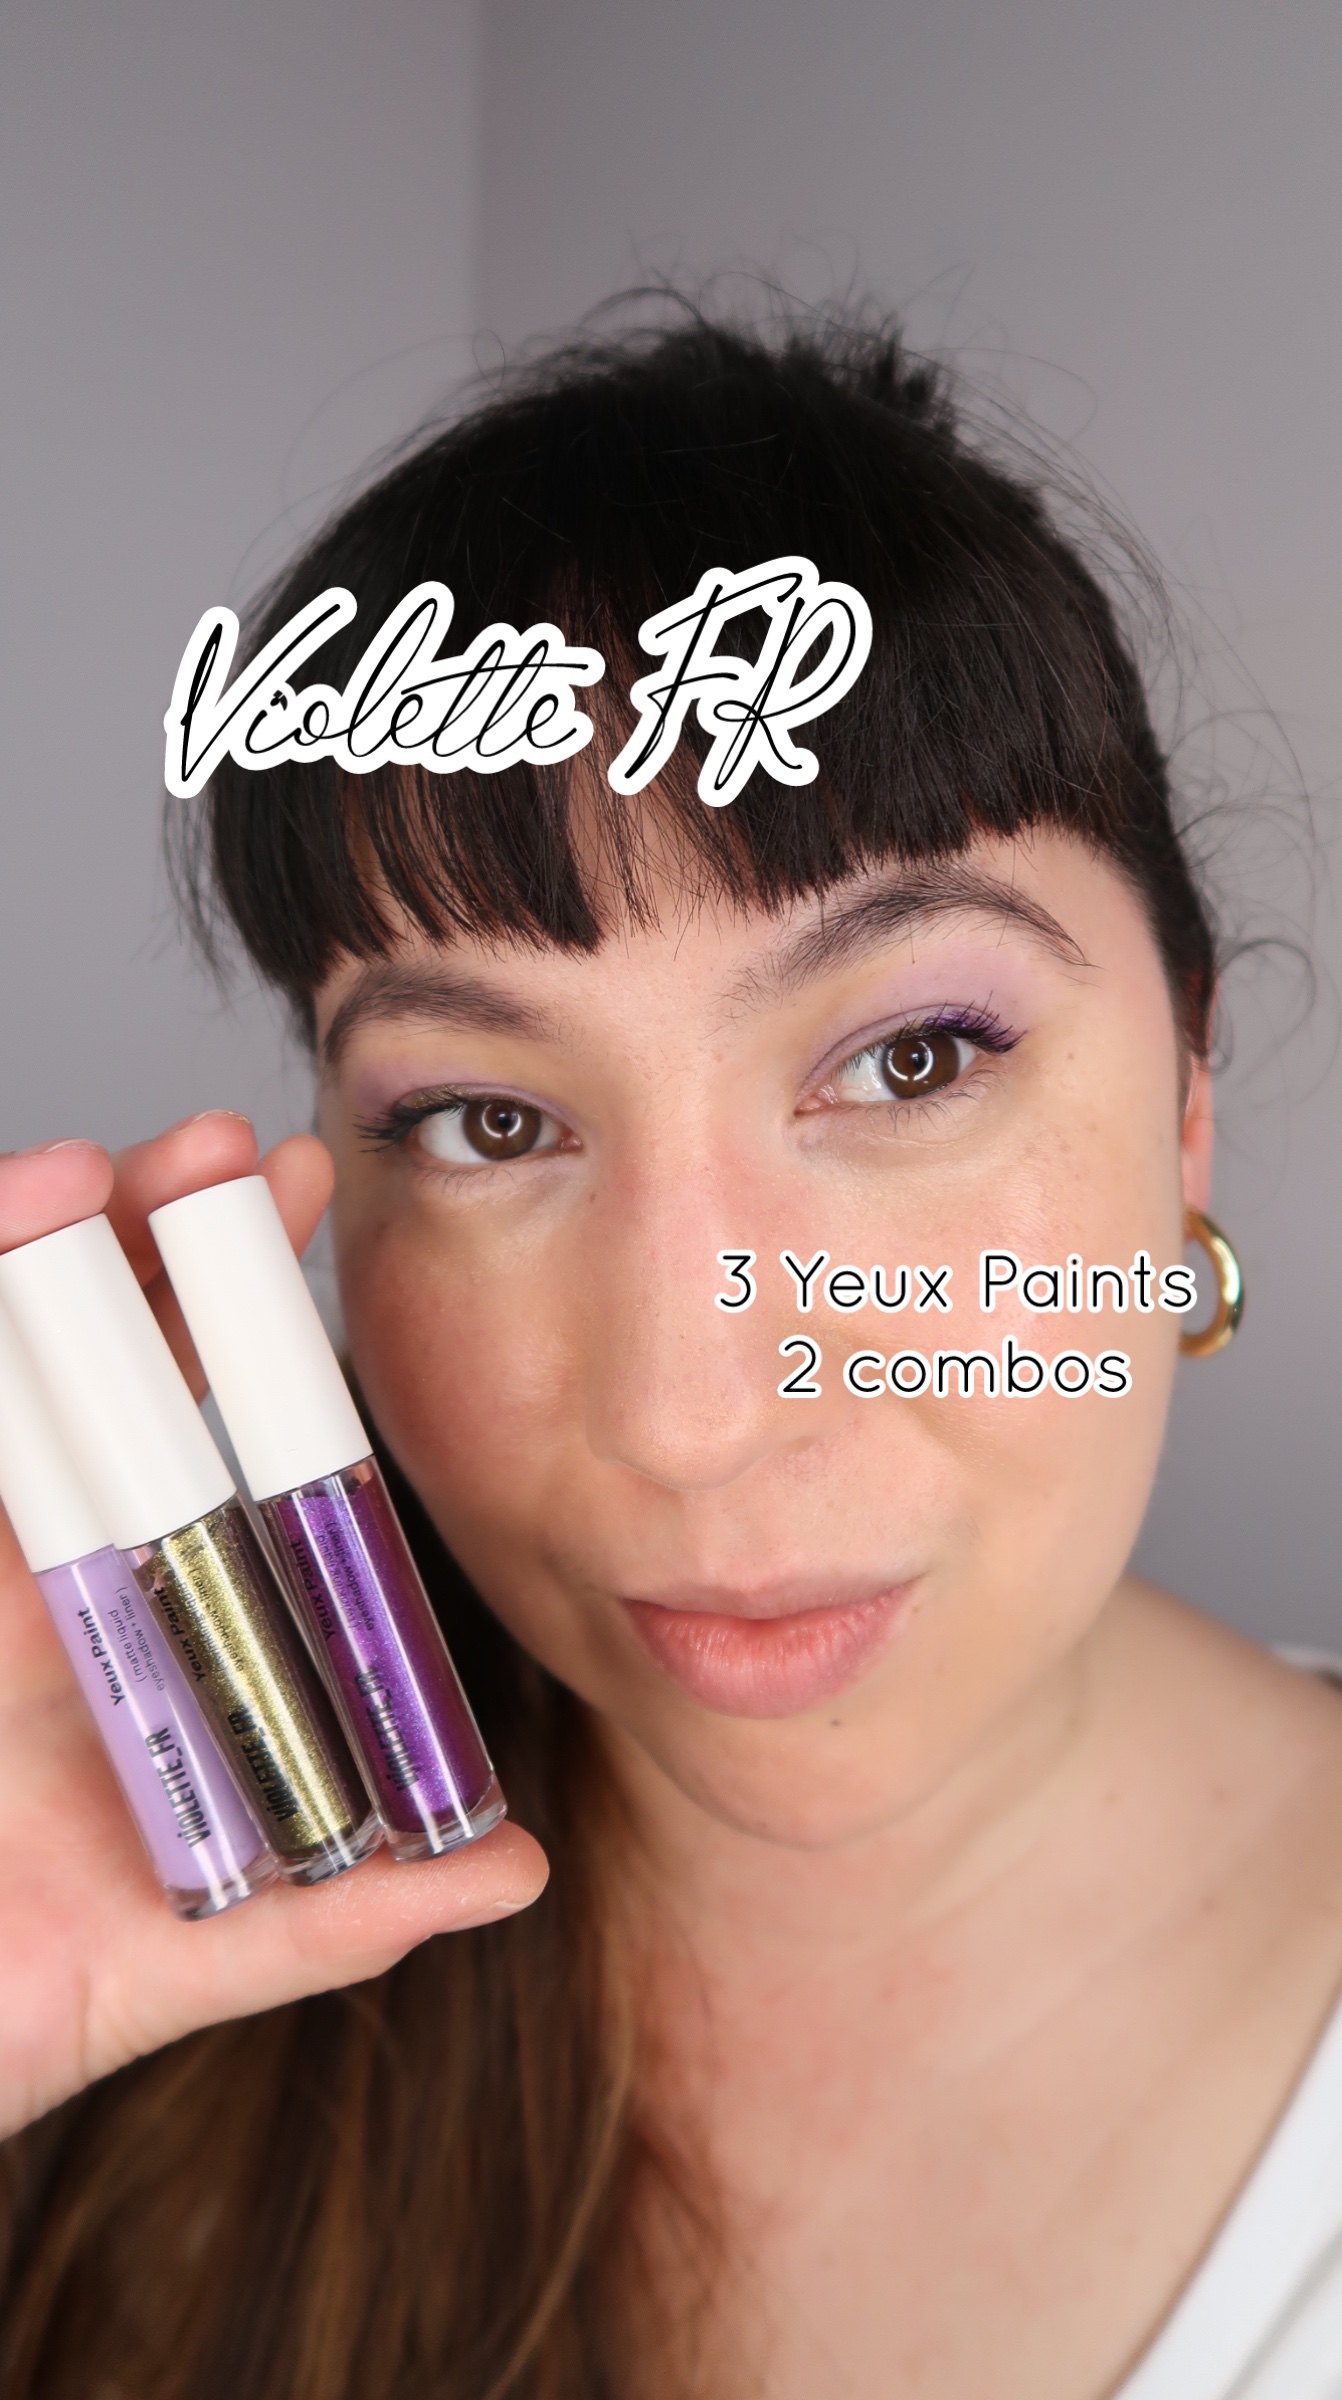 #violettefr #makeup #maquillage #eyemakeup #everydaymakeup